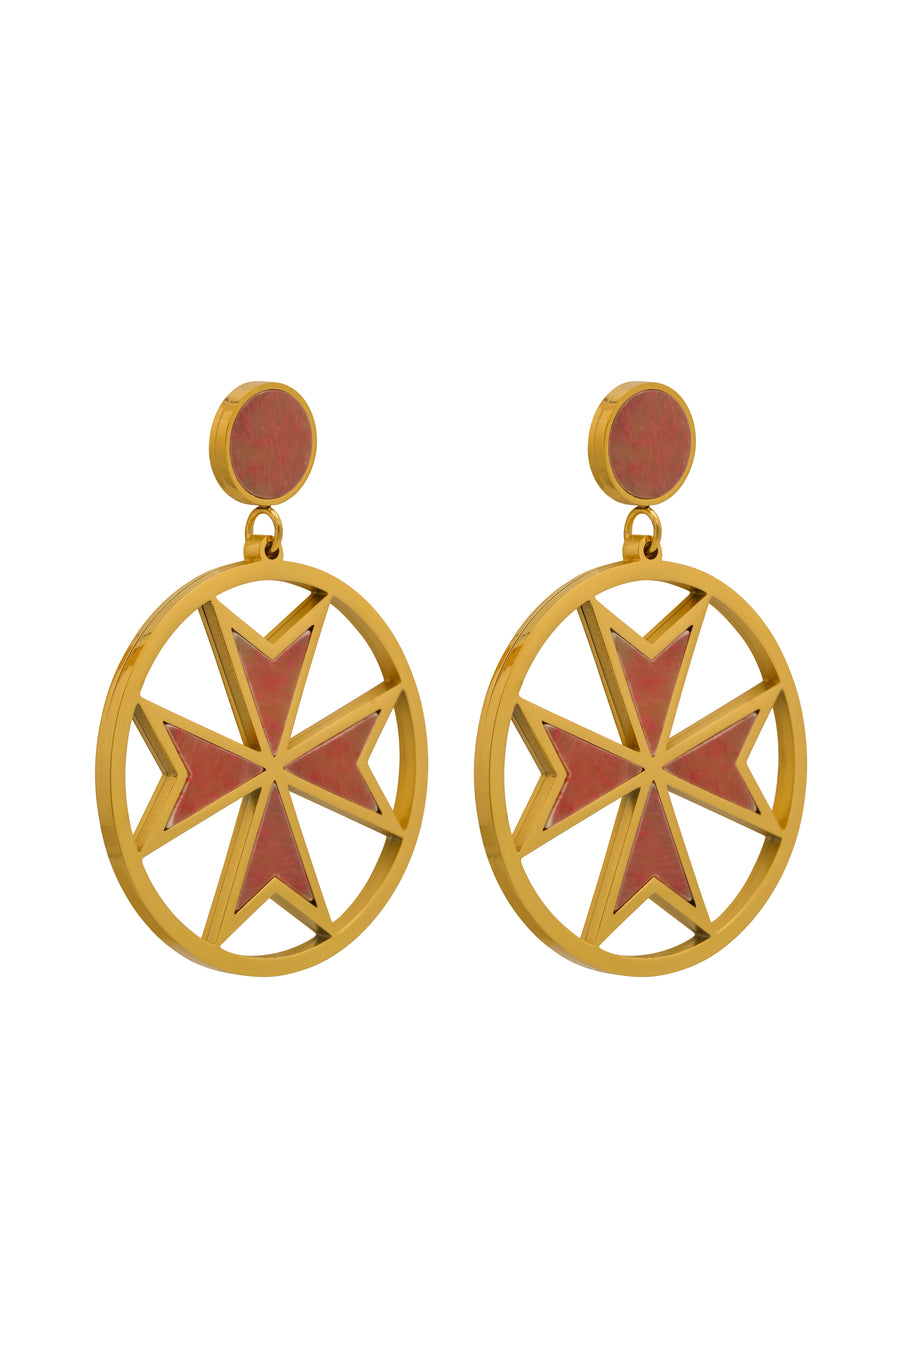 The Pink Marble Maltese Cross Earring Set